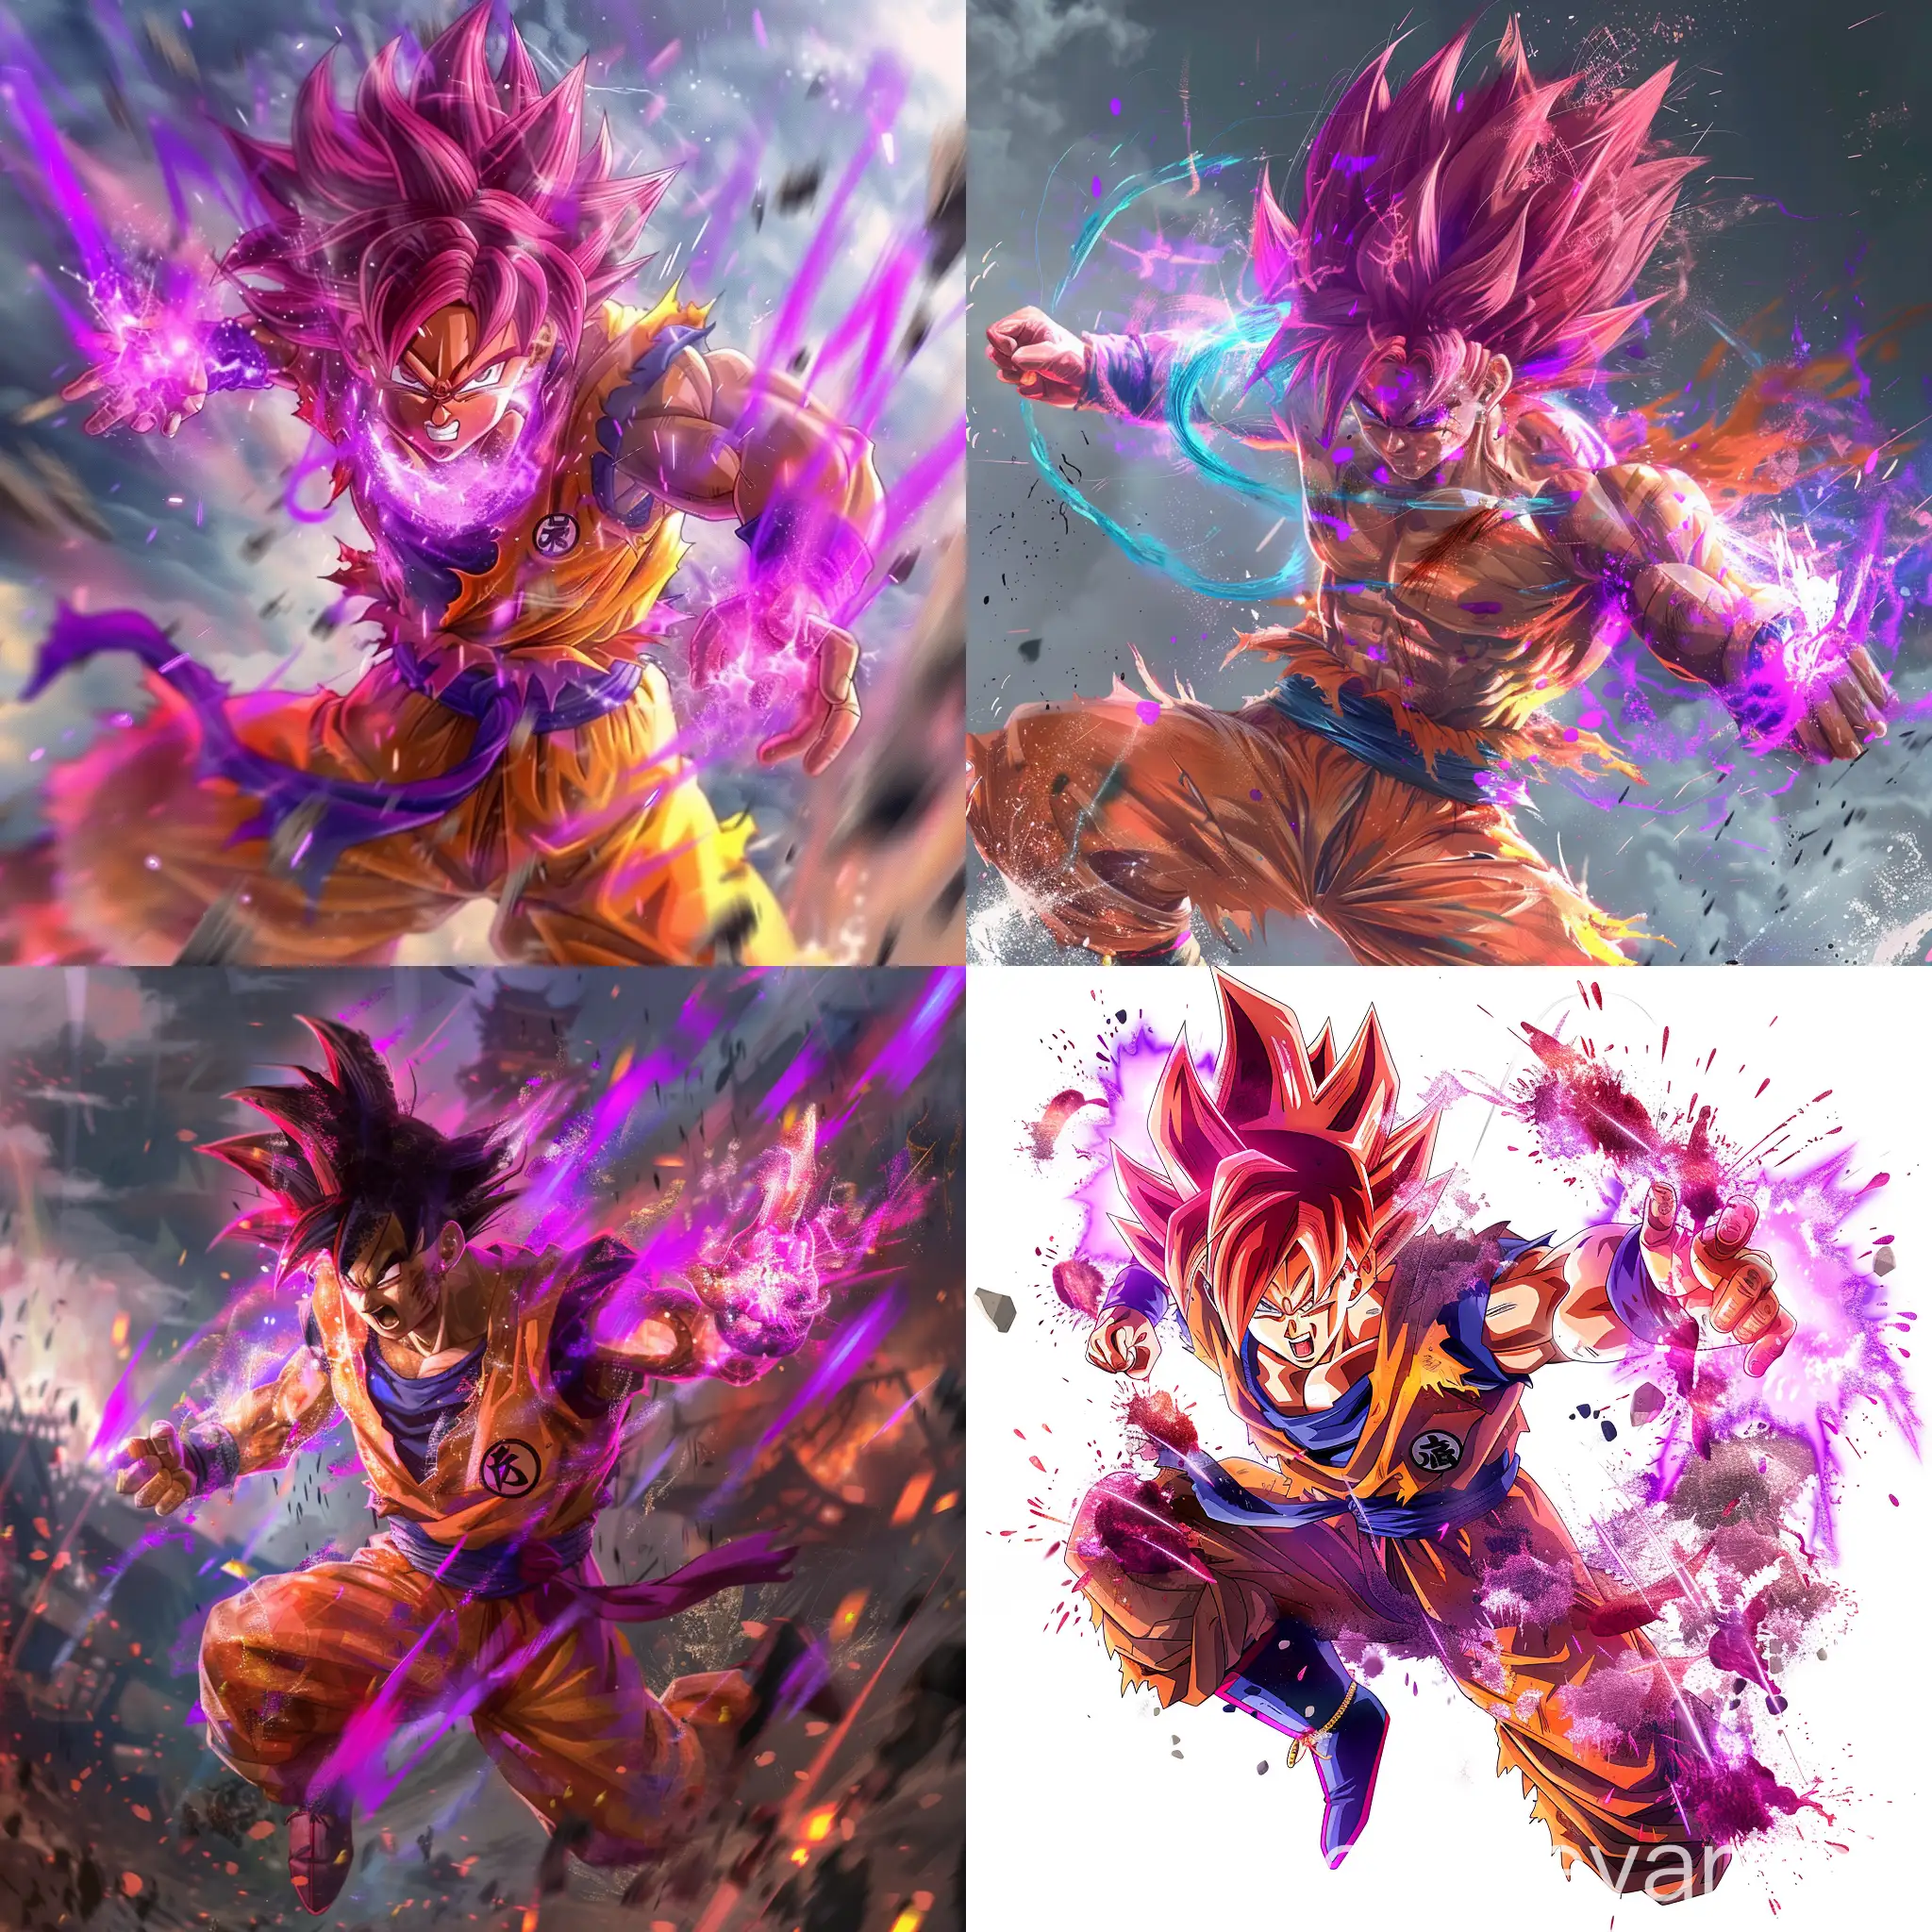 Indian-Goku-in-Super-Saiyan-God-Form-with-Vibrant-Aura